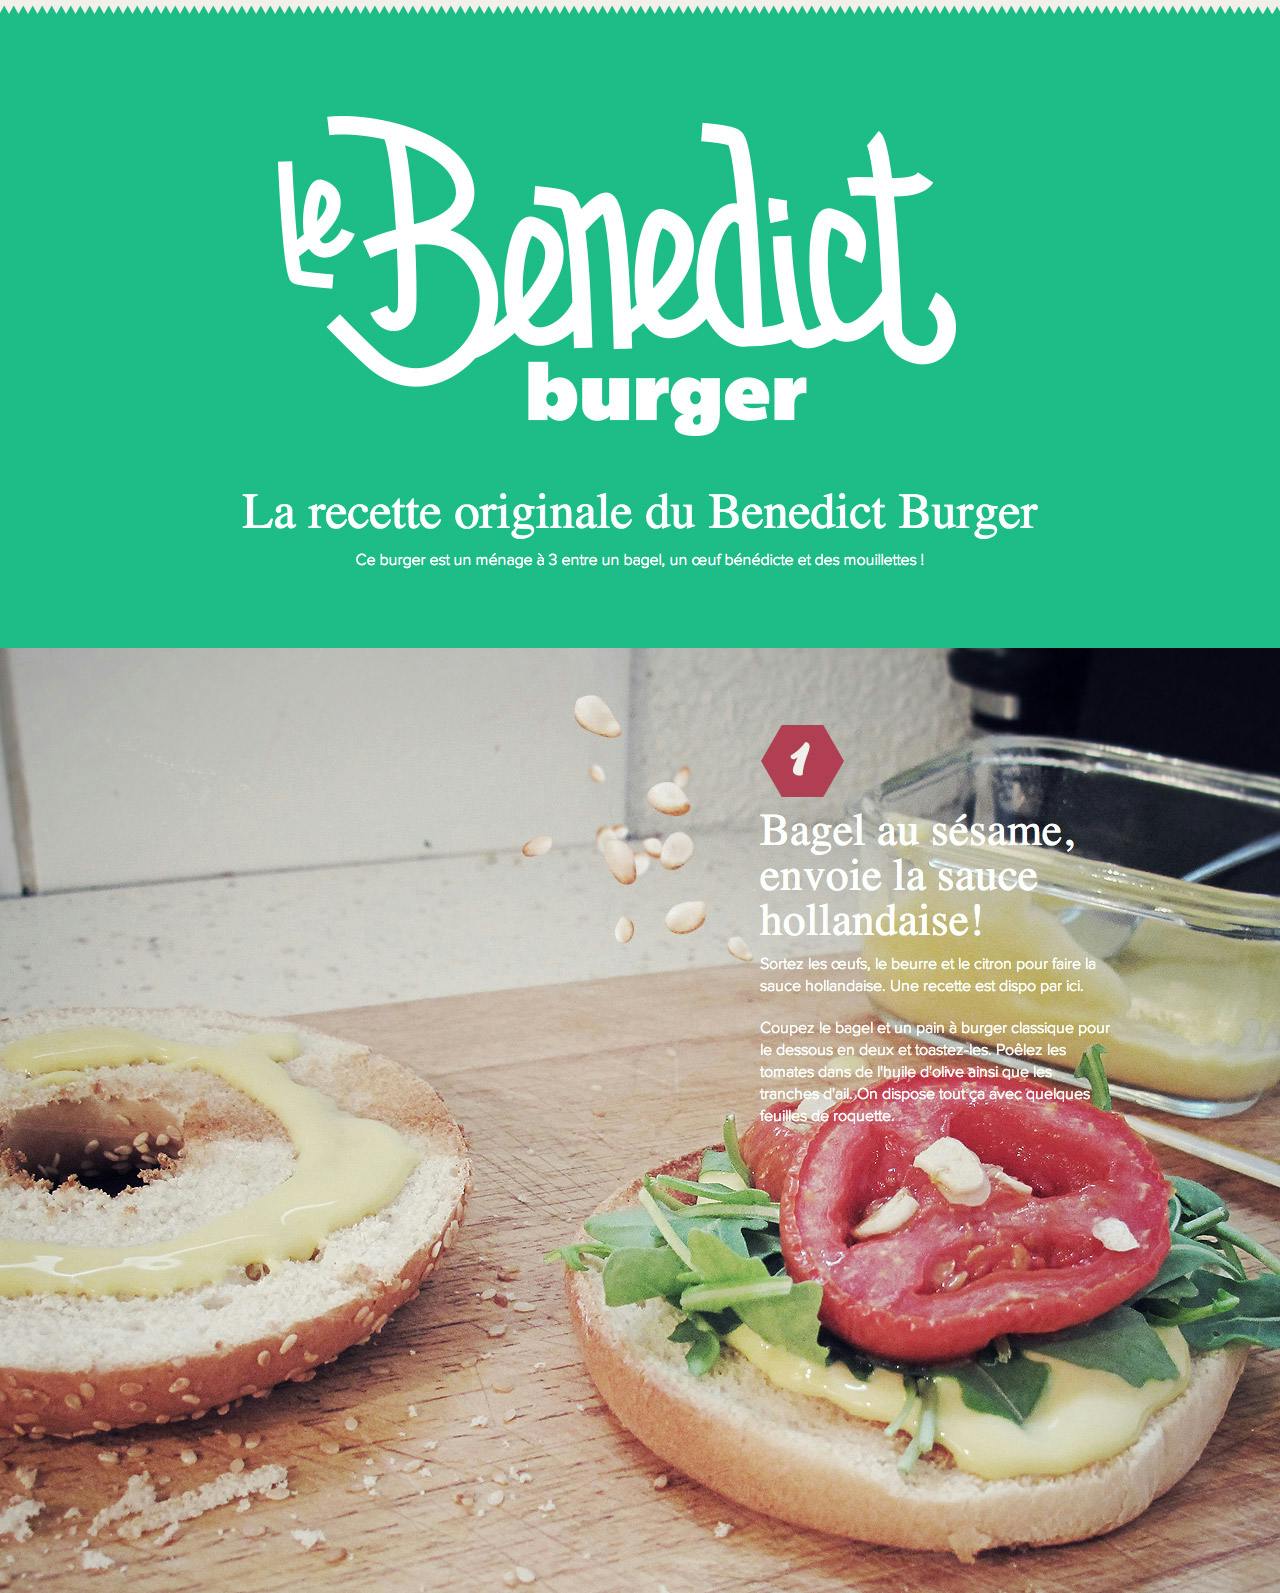 Benedict Burger recipe Website Screenshot